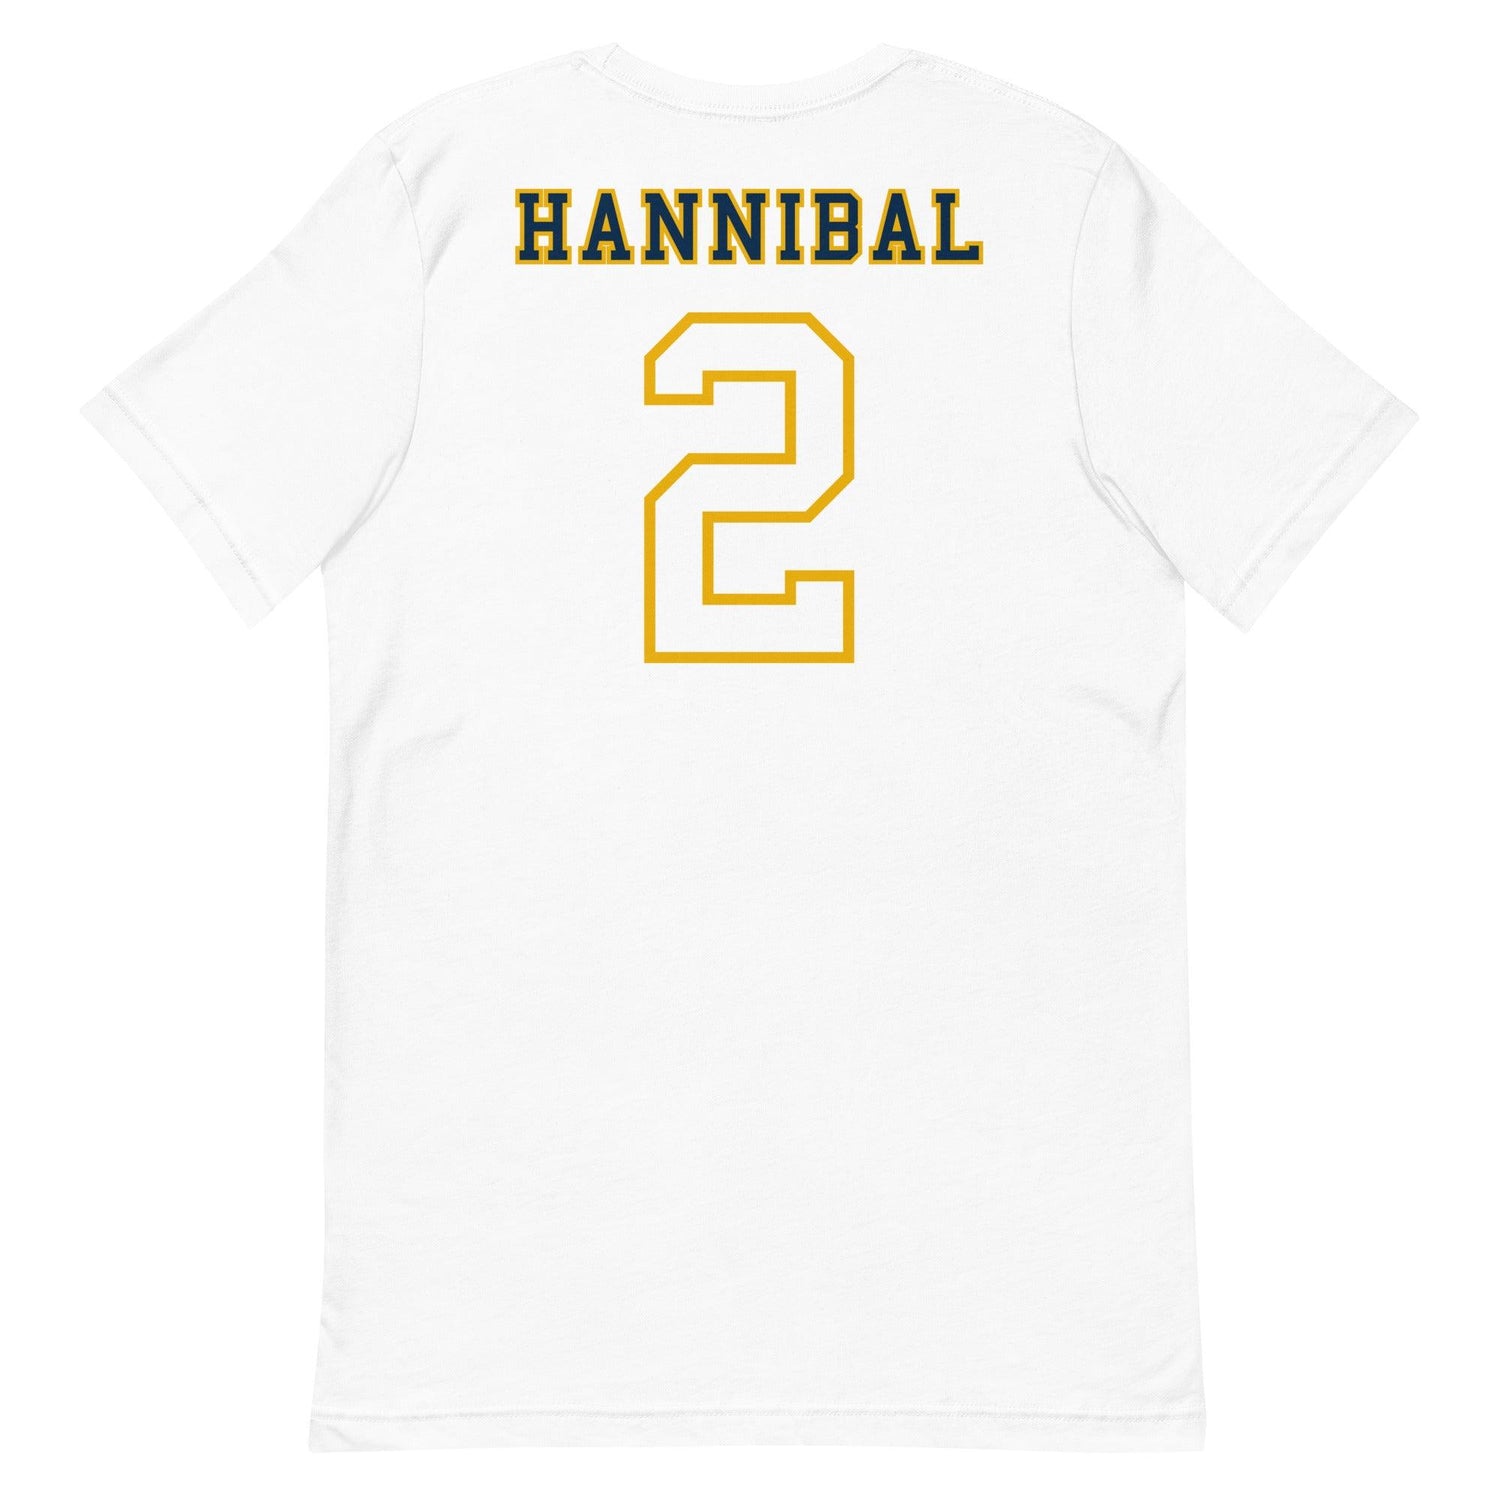 Trae Hannibal Jersey t-shirt – Fan Arch